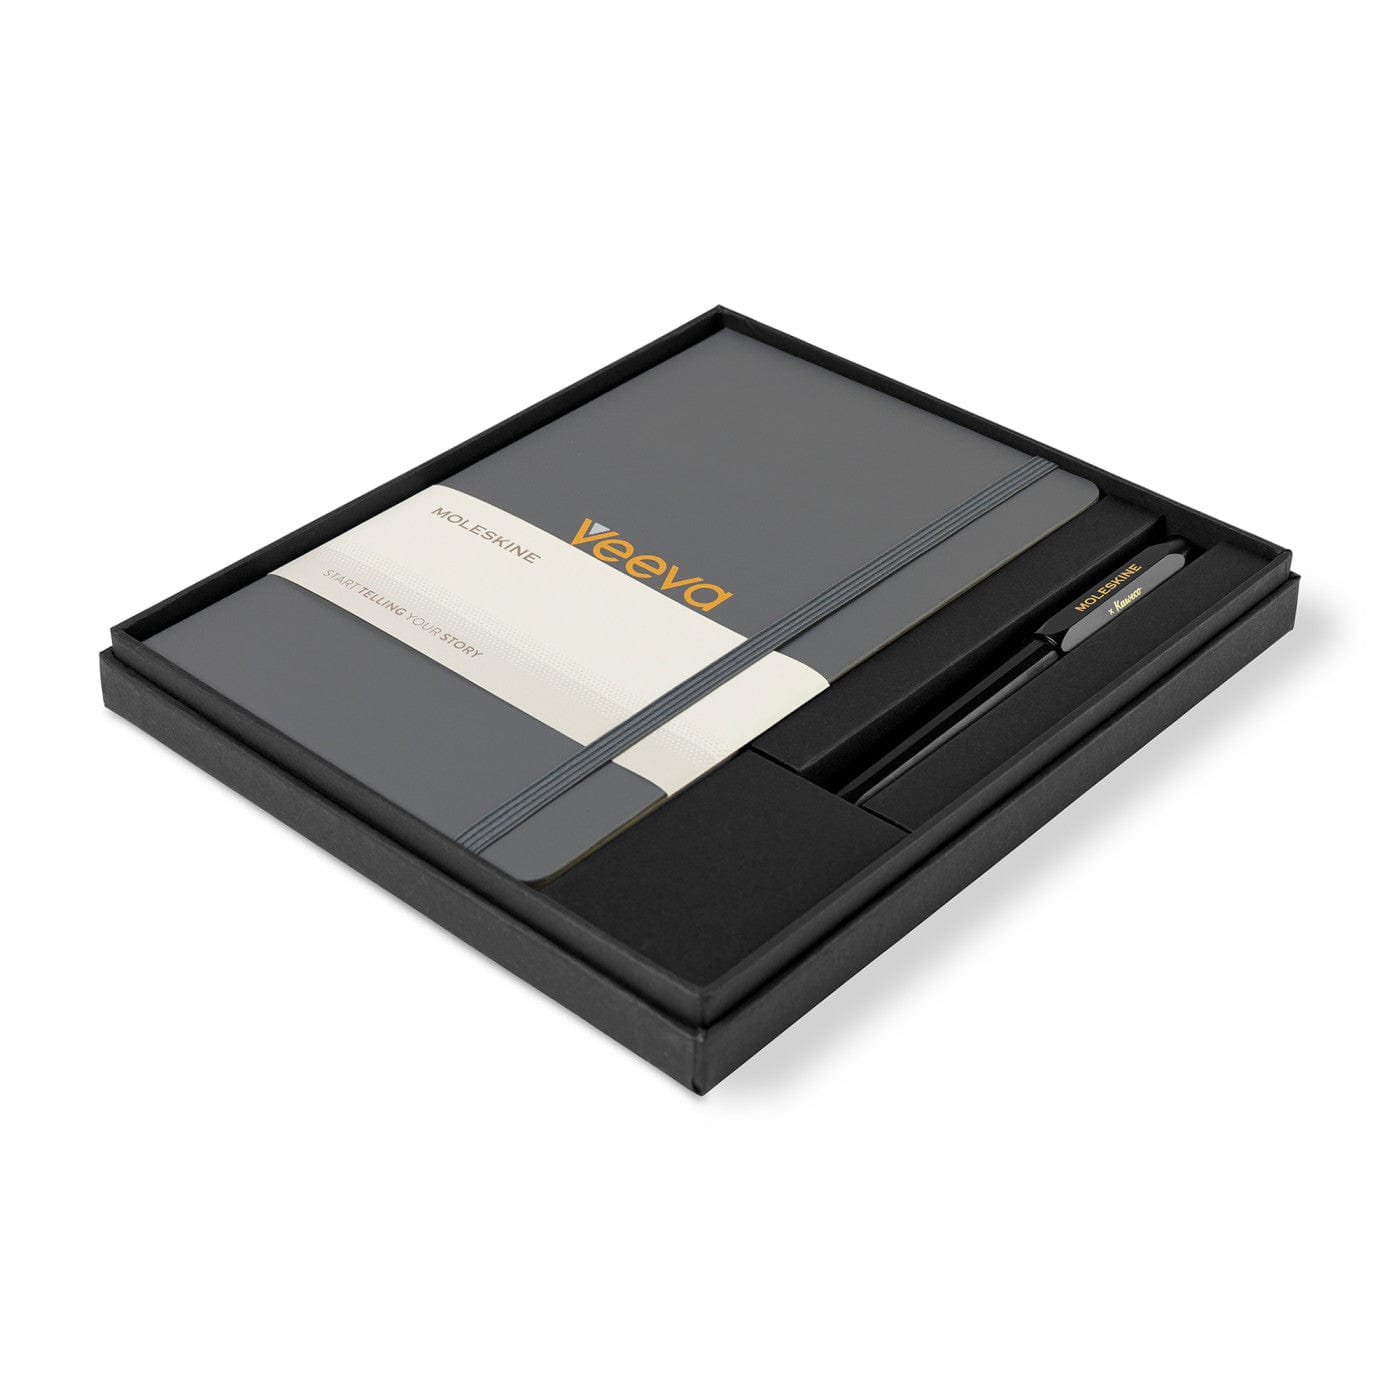 Moleskine Accessories One Size / Slate Grey Moleskine - Large Notebook and Kaweco Pen Gift Set